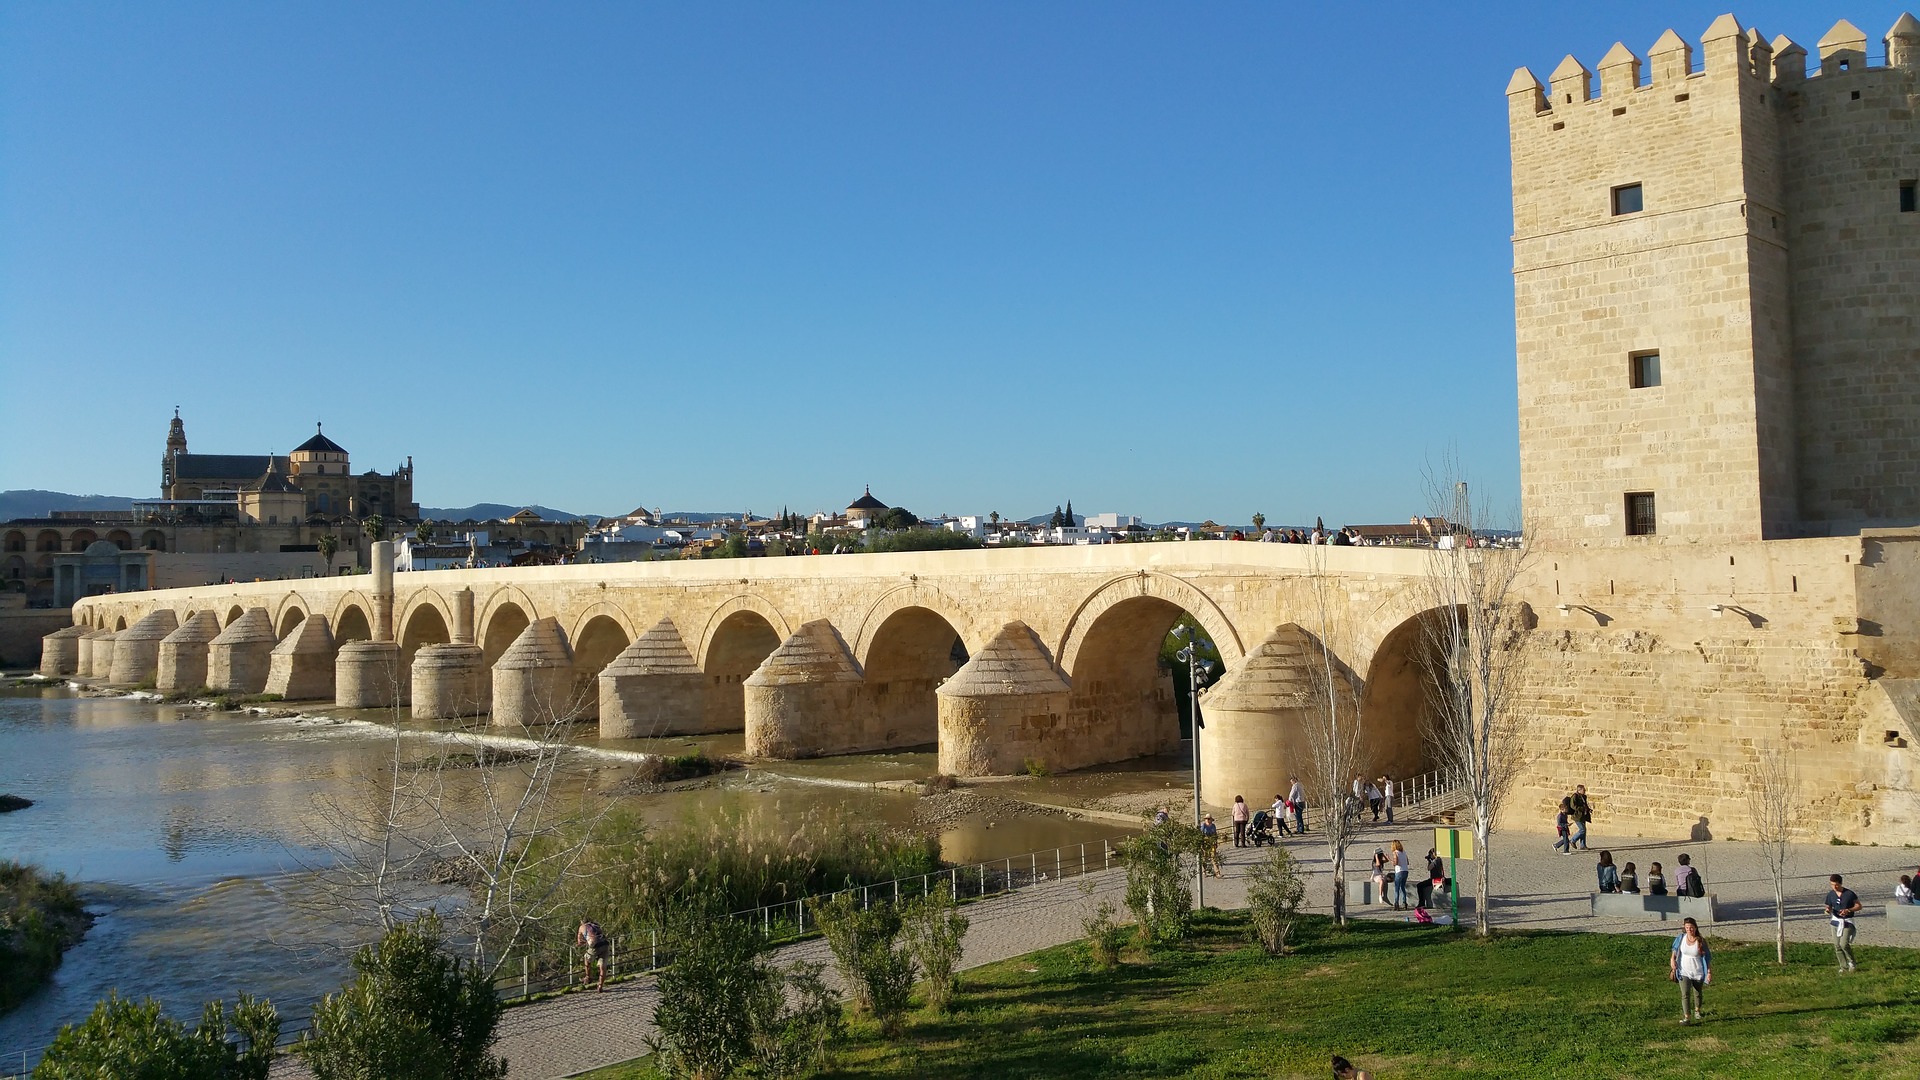 The Best of Spain, Roman Bridge of Cordoba, Cordoba, Spain